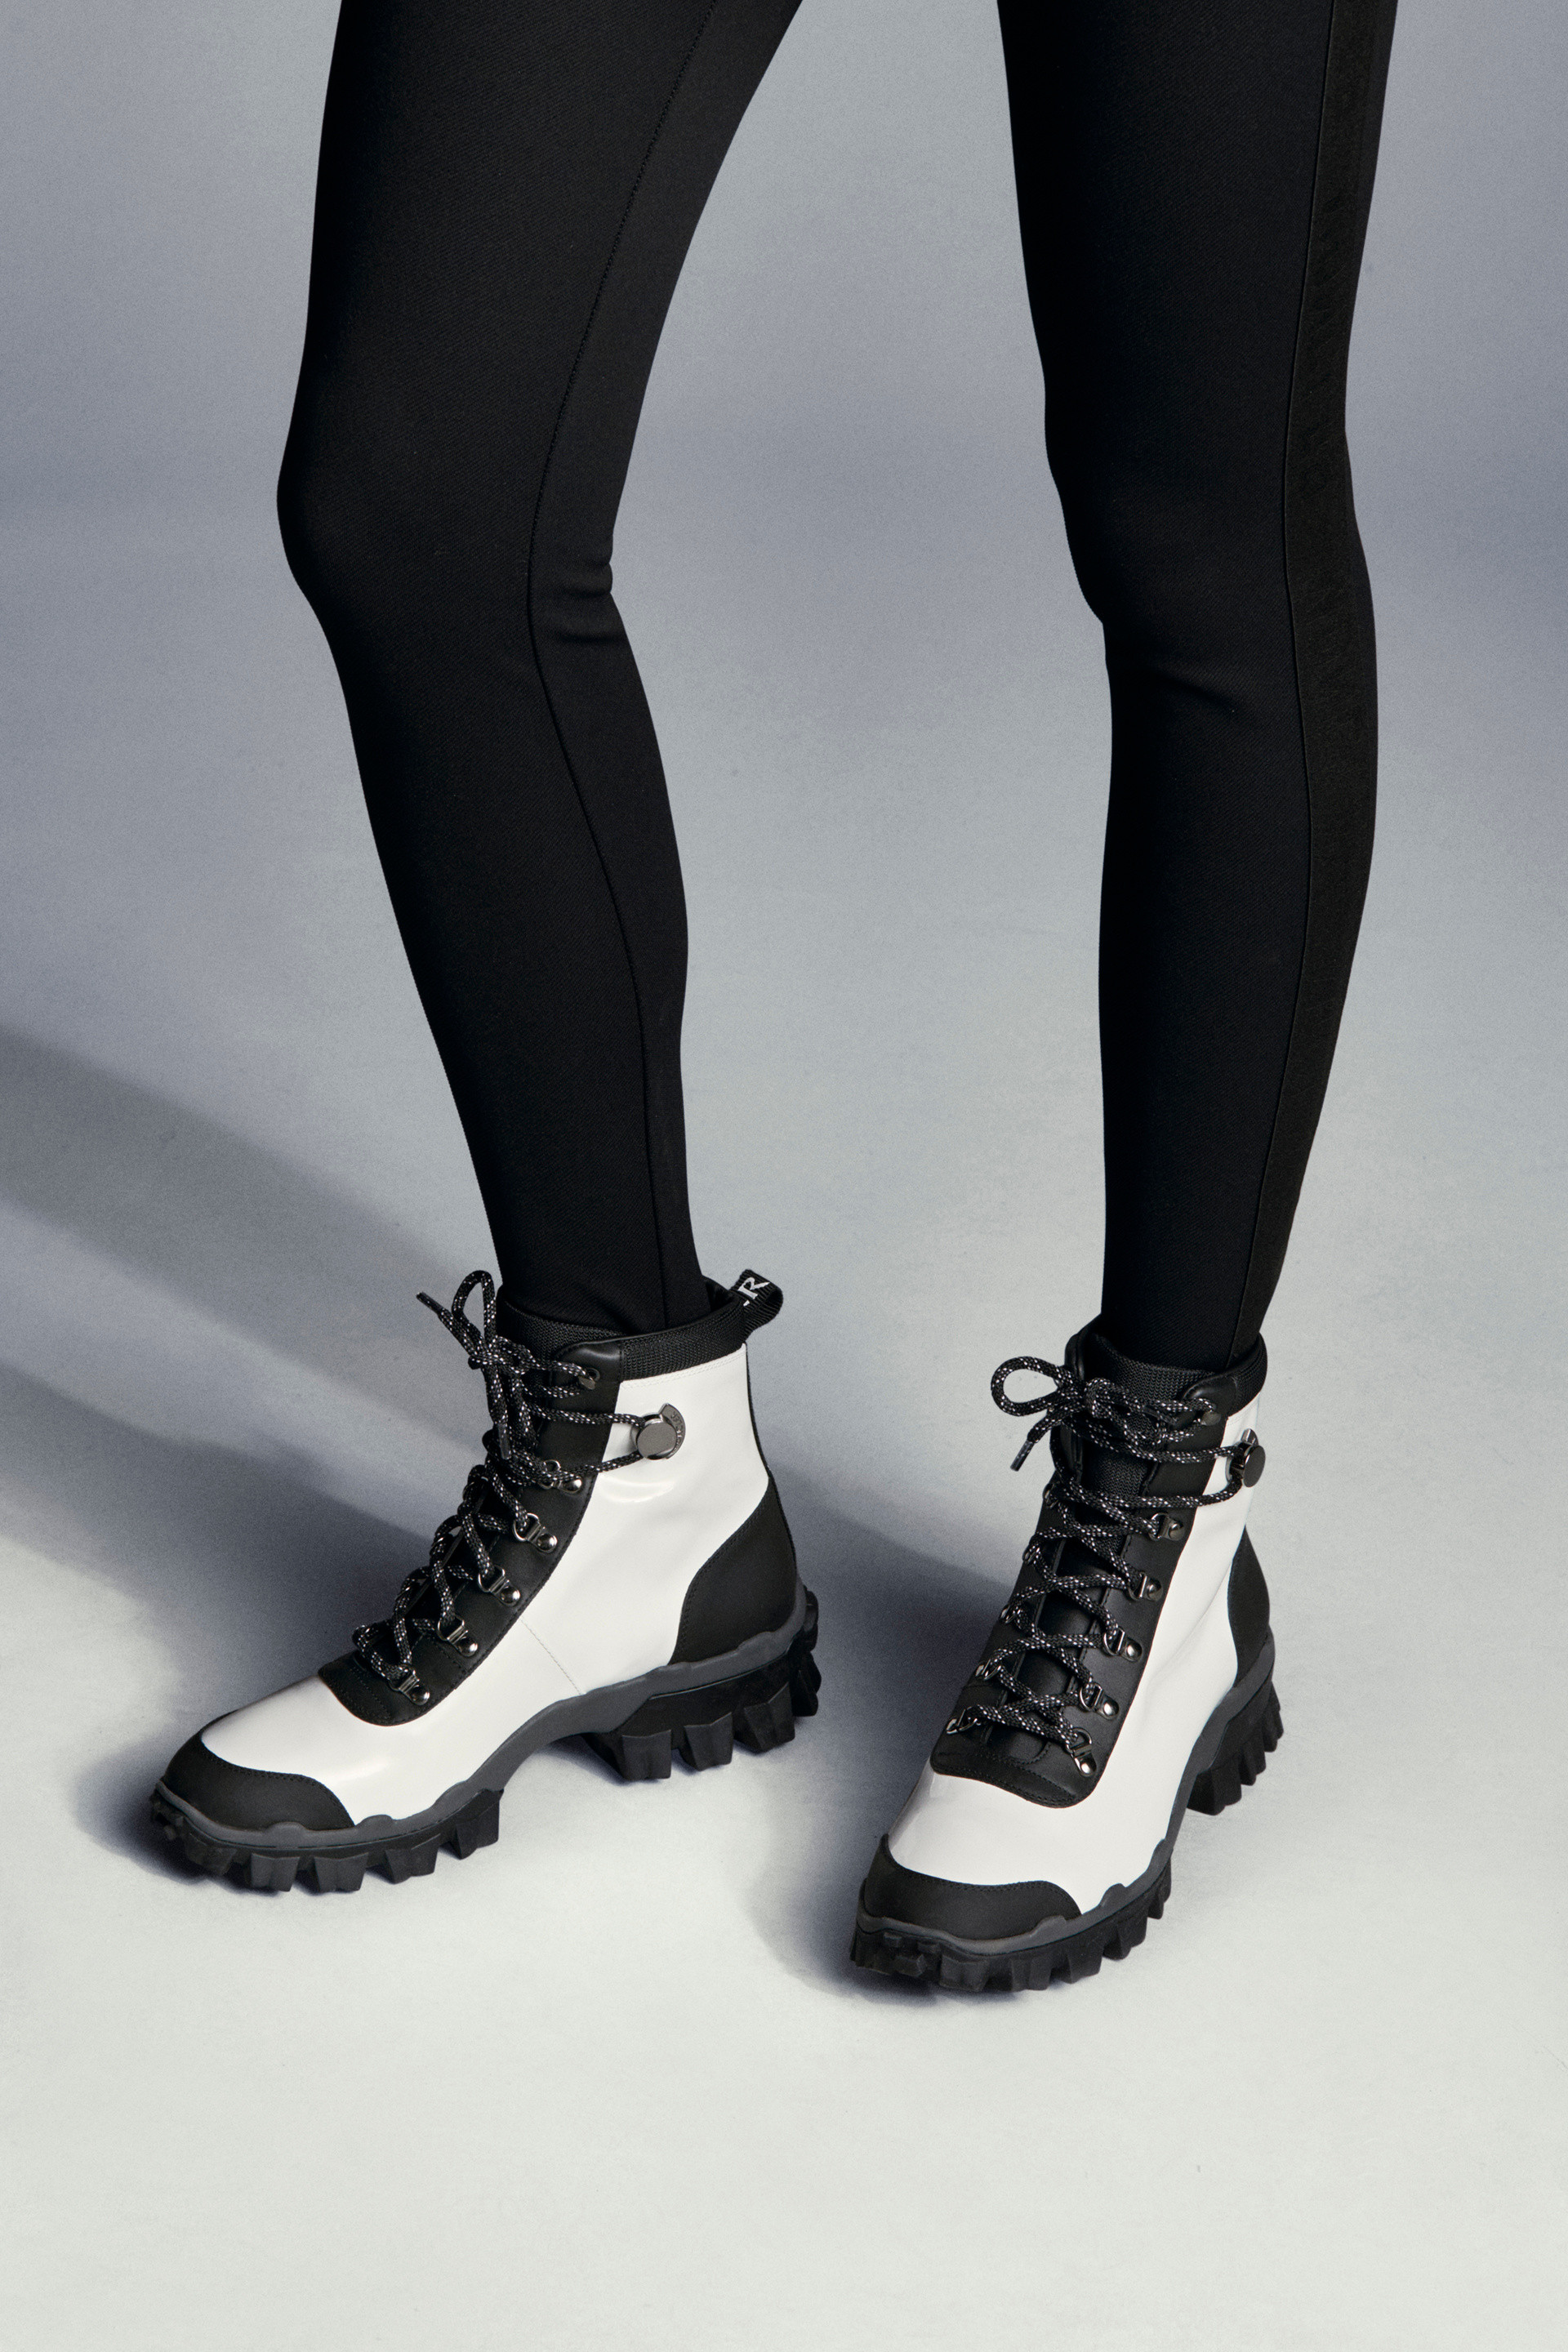 moncler walking boots Off 72% - www.loverethymno.com